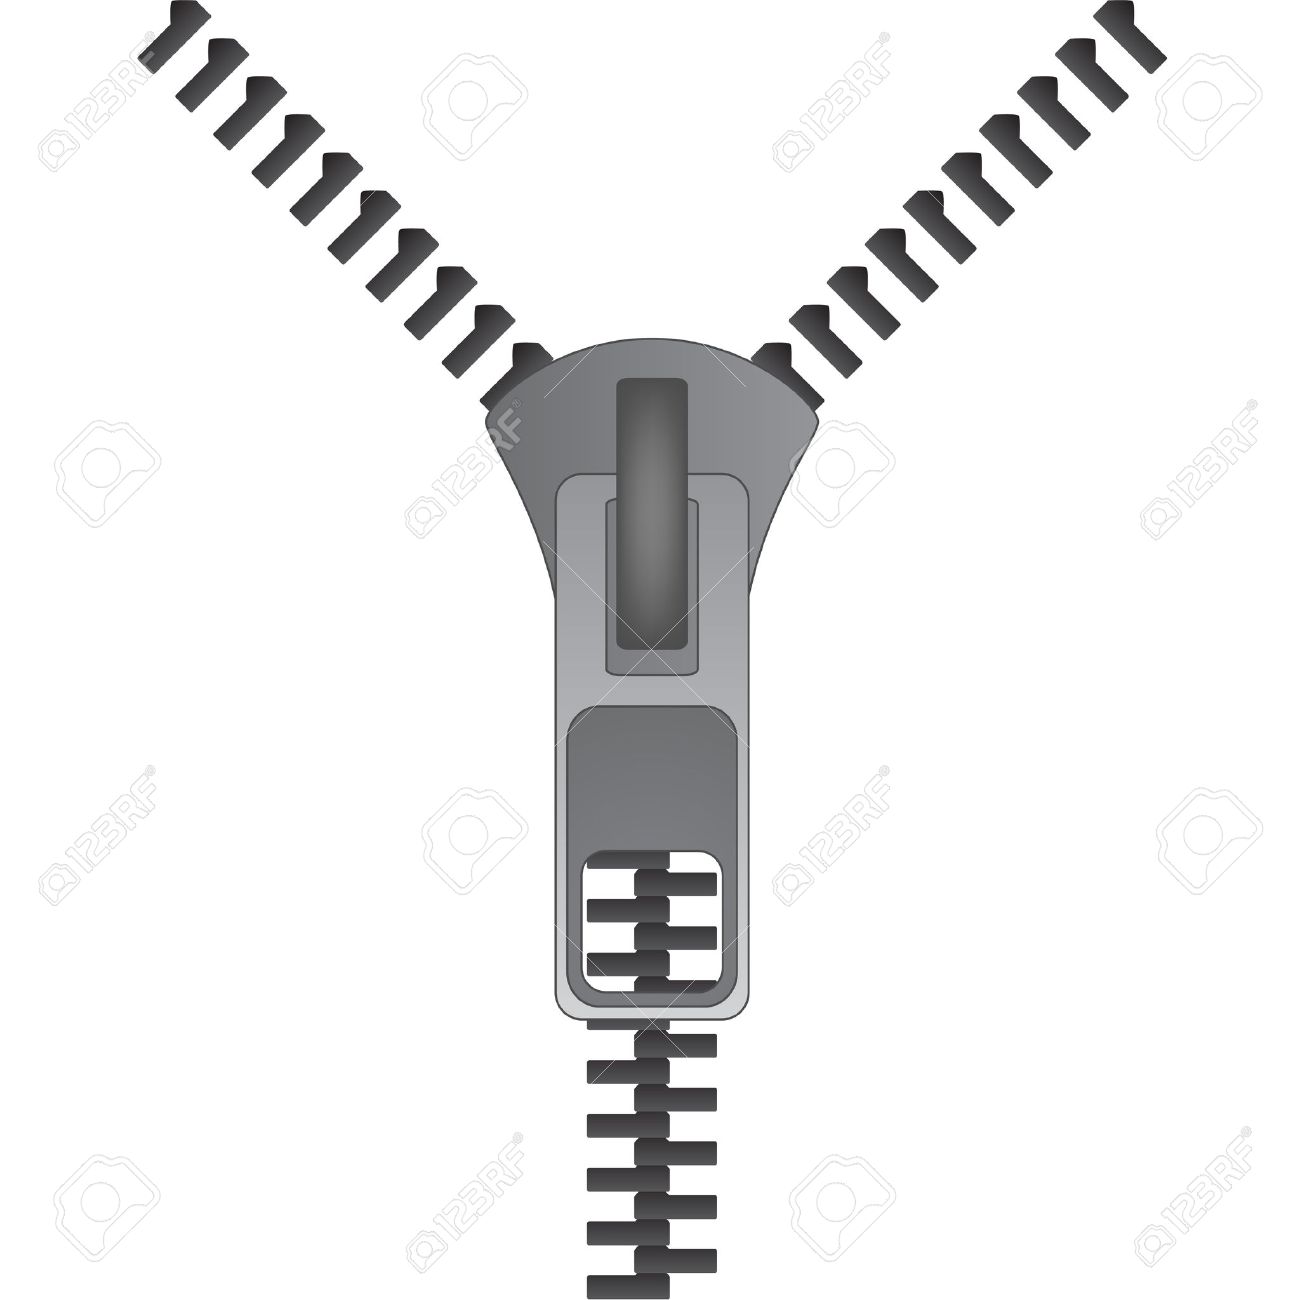 zipper clipart vector - photo #26